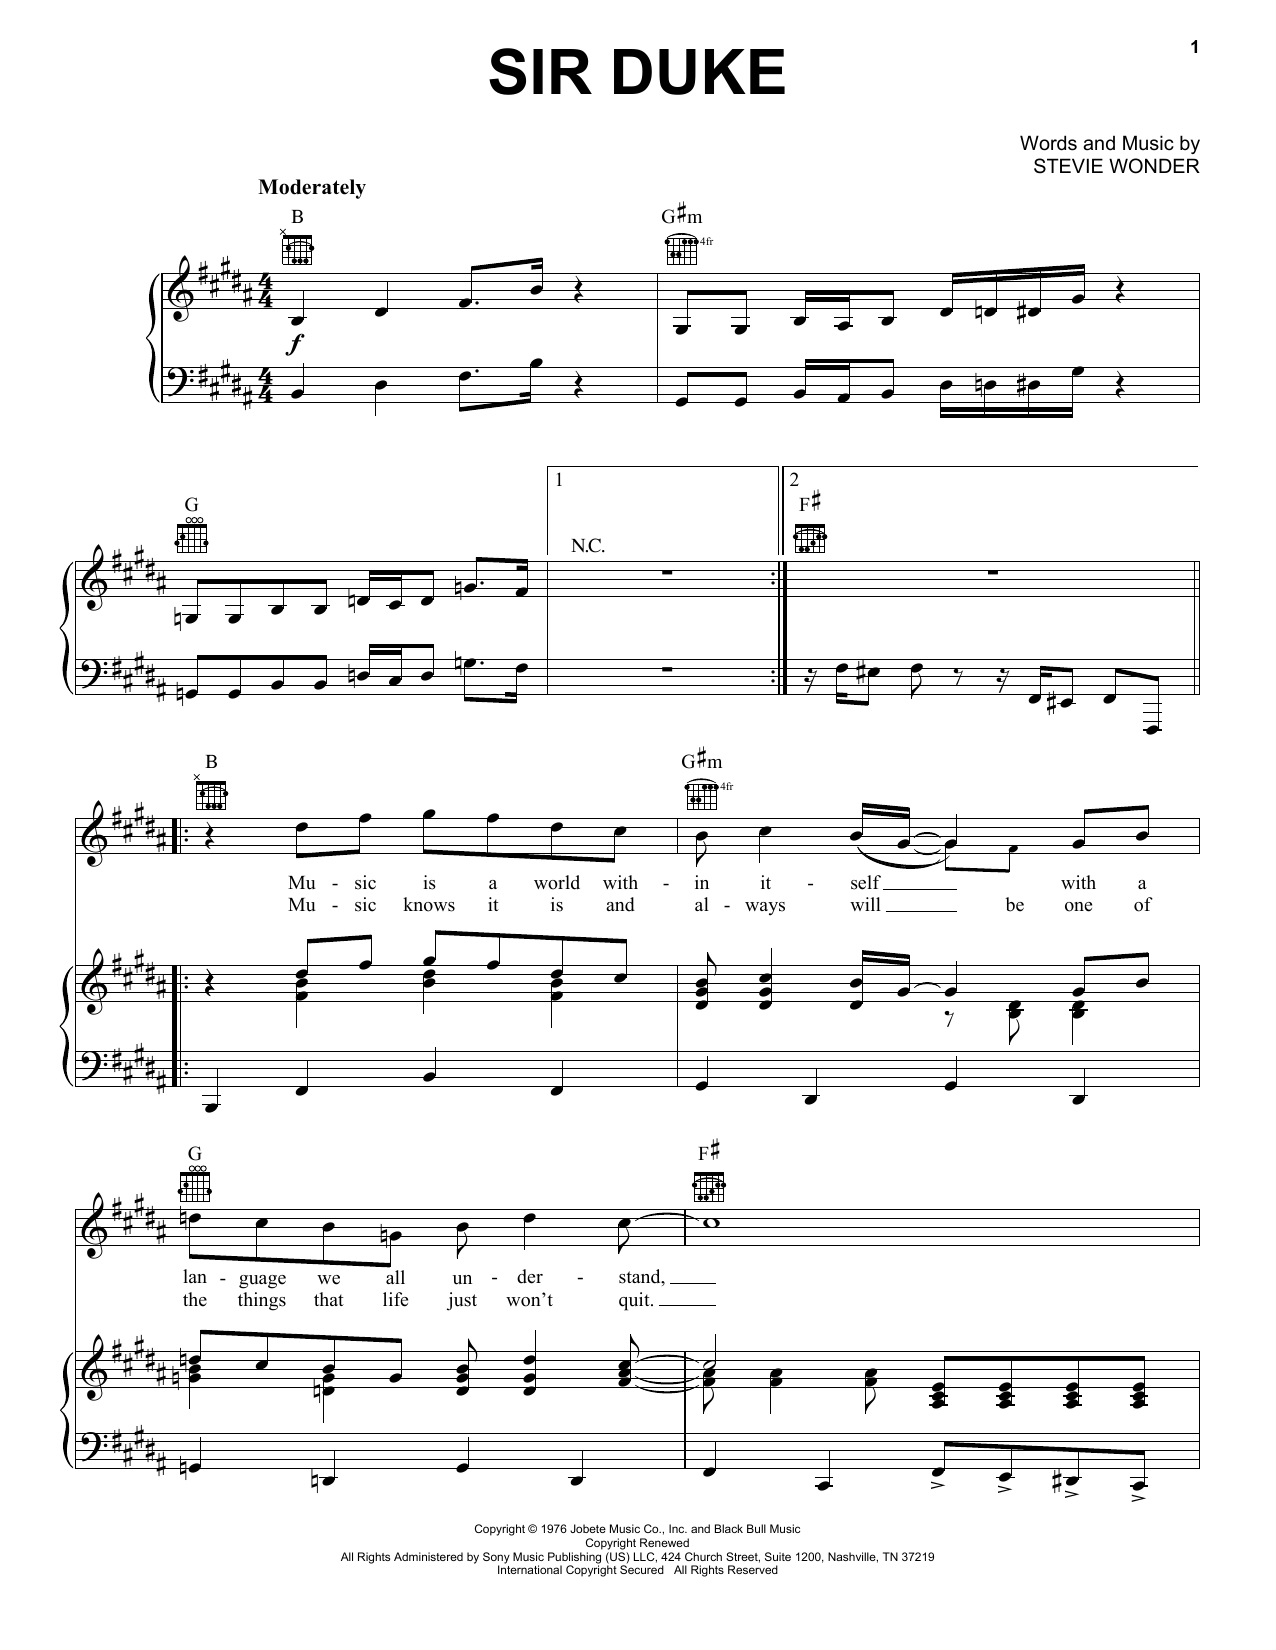 Stevie Wonder Sir Duke Sheet Music Notes & Chords for Voice - Download or Print PDF